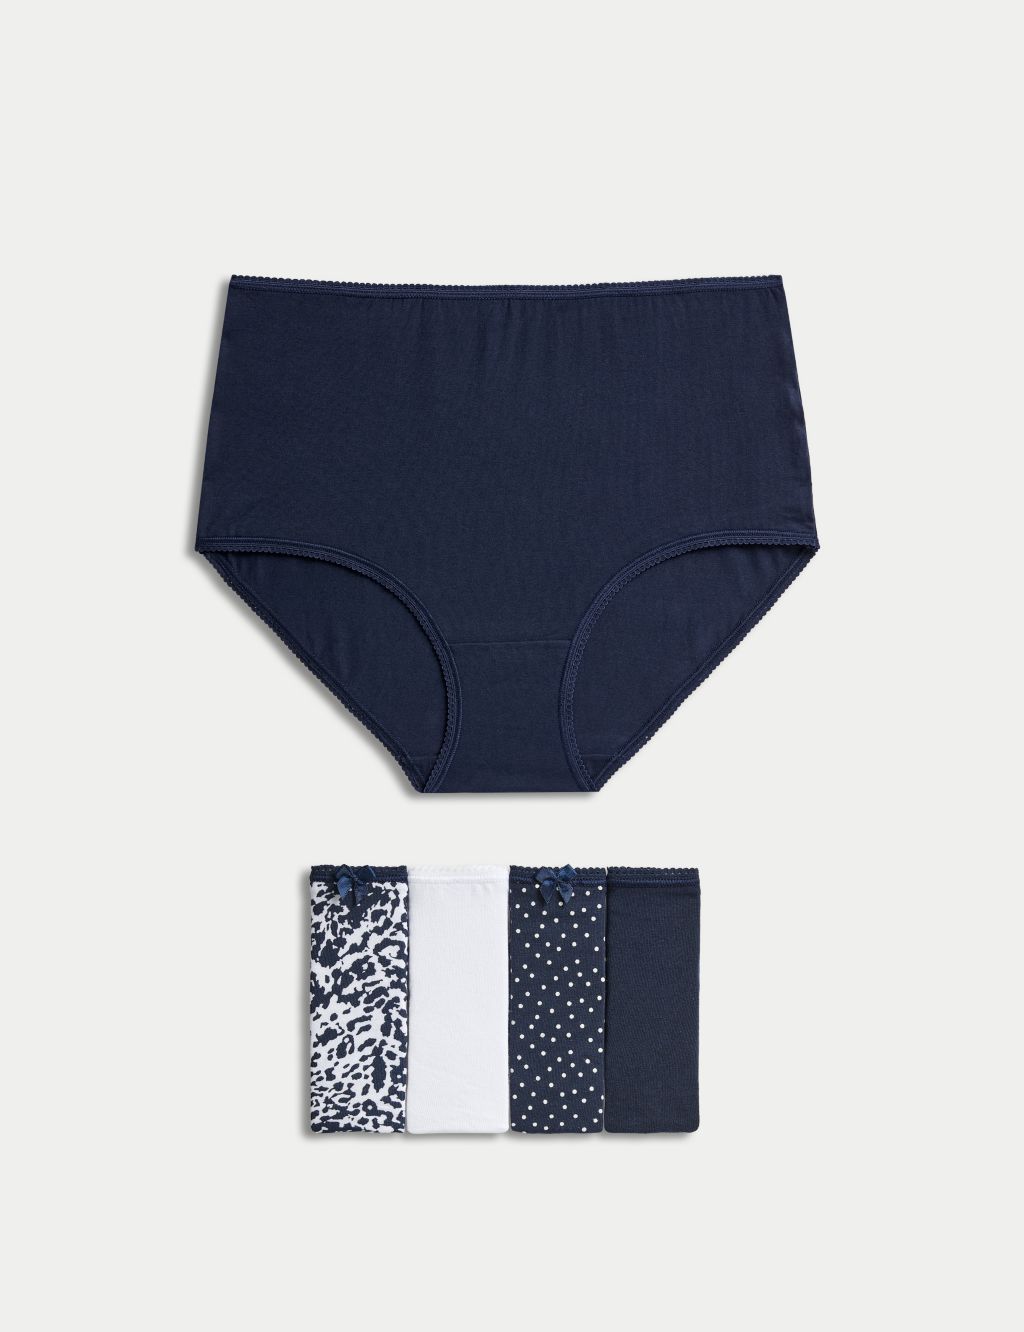 $48 7pc Sz L Laura Ashley Cotton Brief Underwear Panties Pink Gray